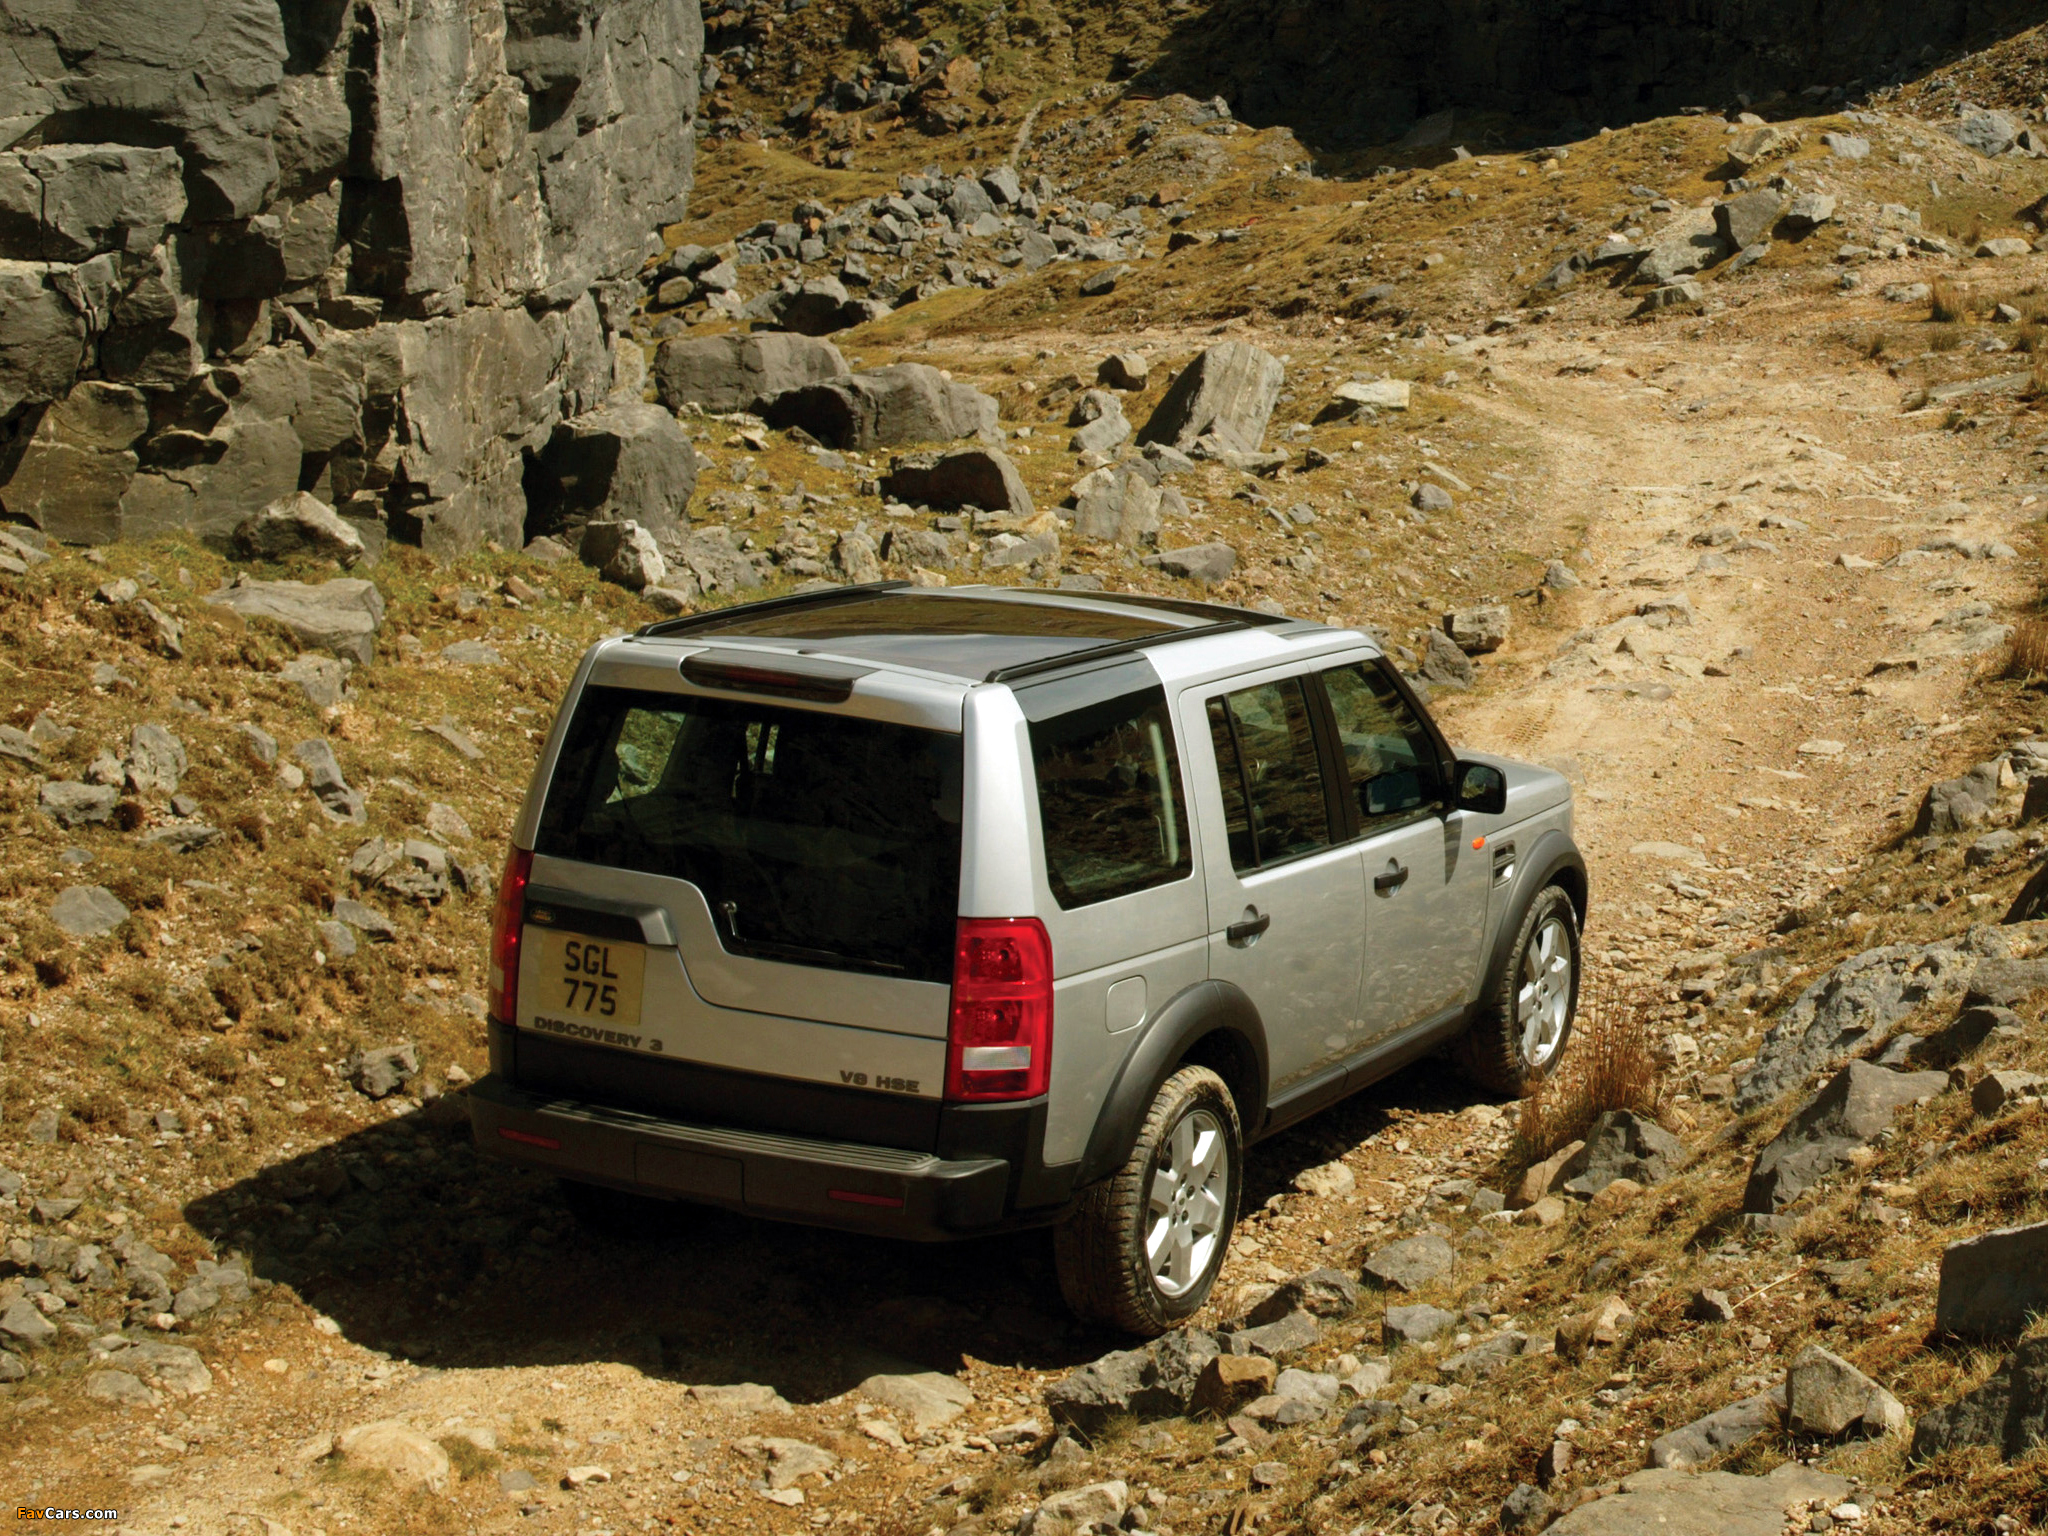 Дискавери три. Land Rover Discovery 3 2004. Land Rover Discovery 3 2005. Land Rover lr3/Discovery 3. Ленд Ровер Дискавери 3 2008 года.